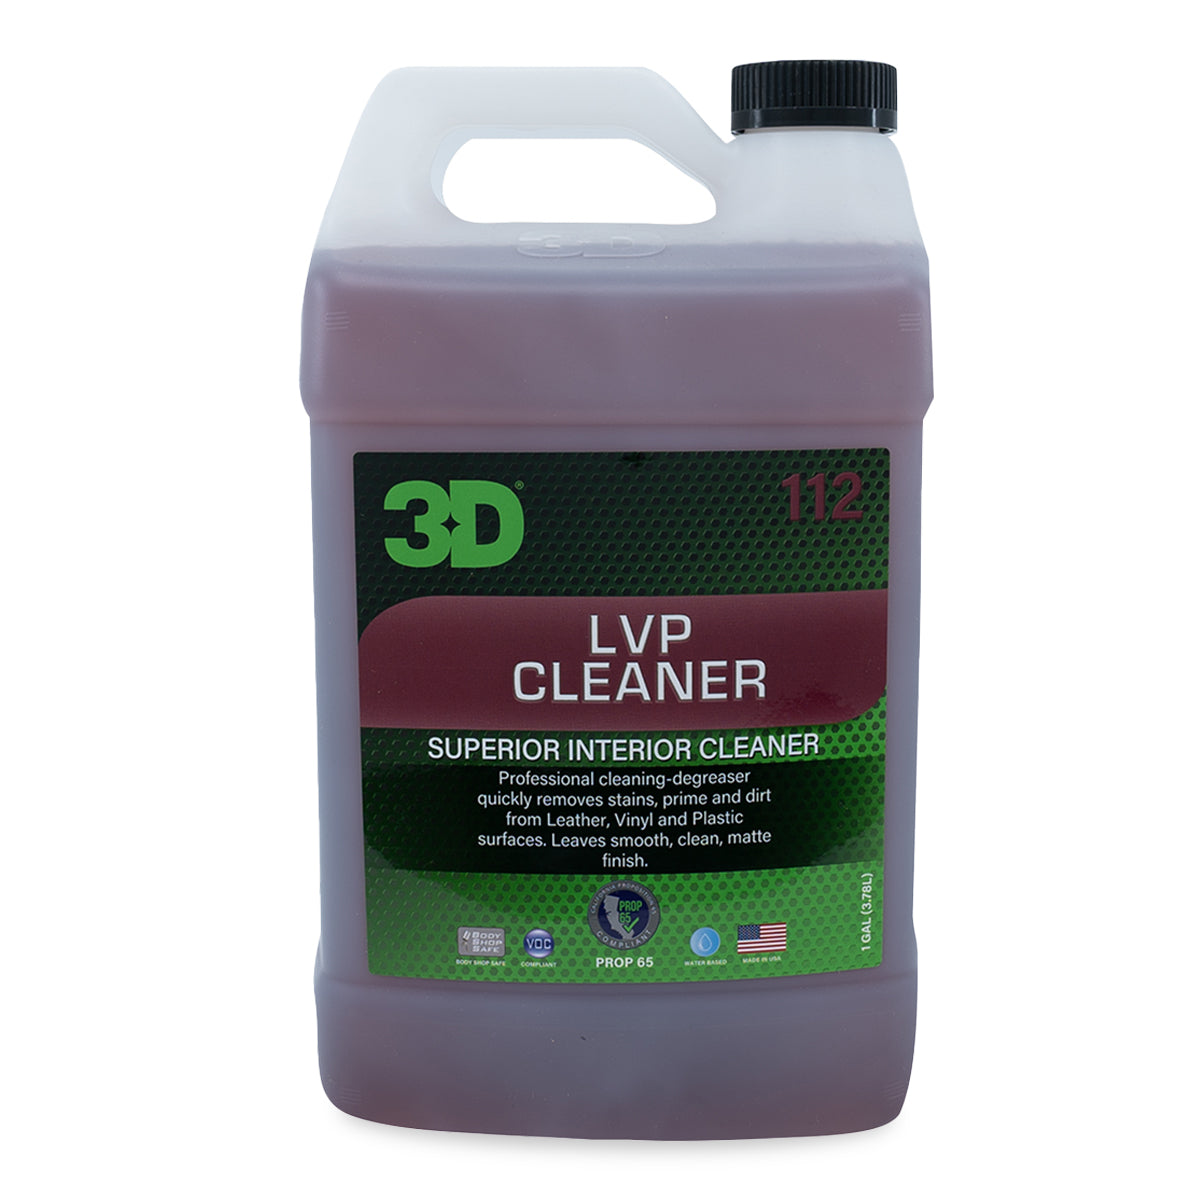 3D LVP CONDITIONER: 910 3D LVP CONDITIONER™️ cleans, conditions